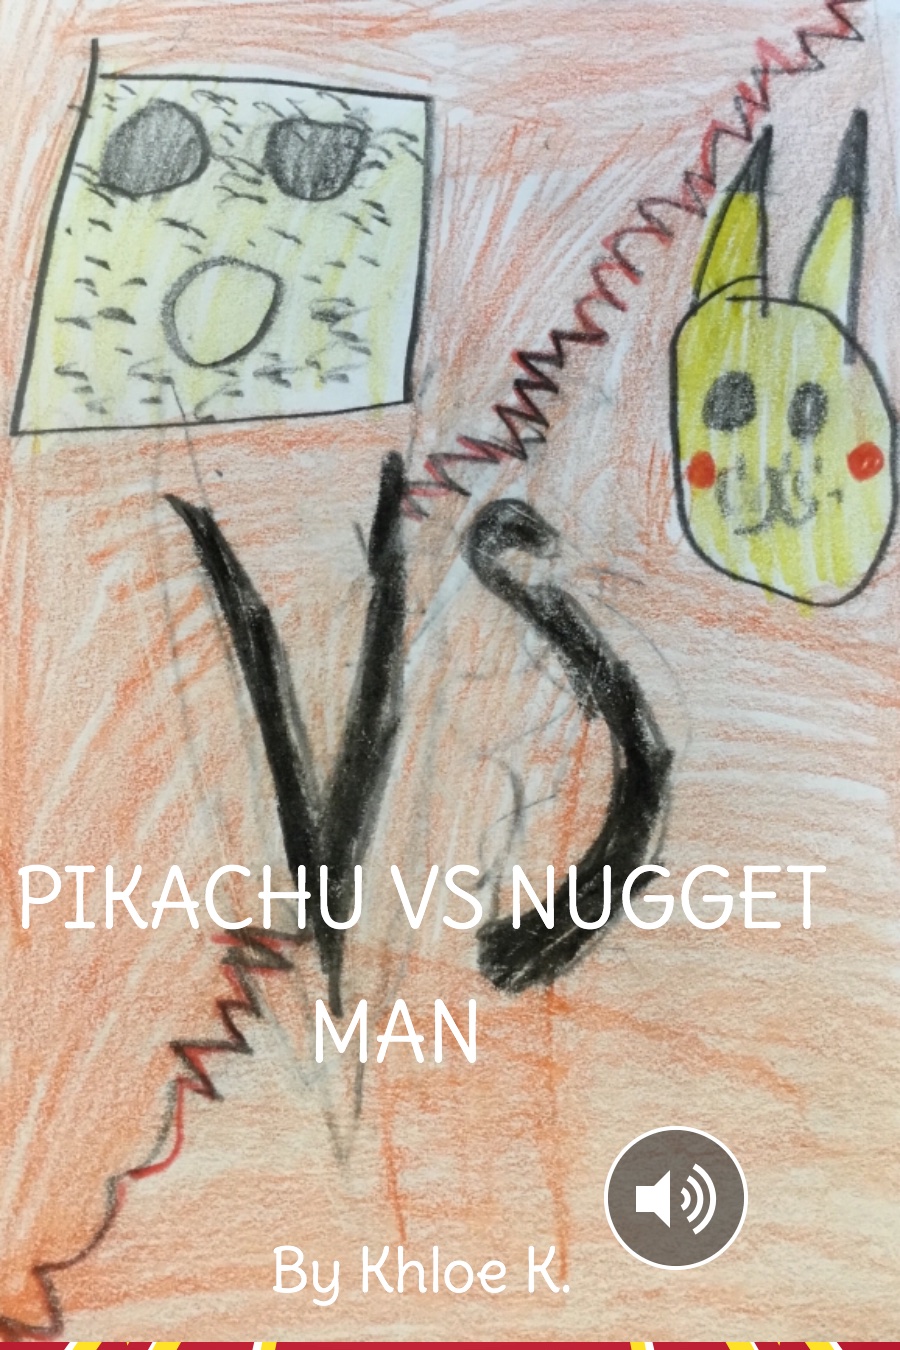 Pikachu vs. Nugget Man by Khloe K.